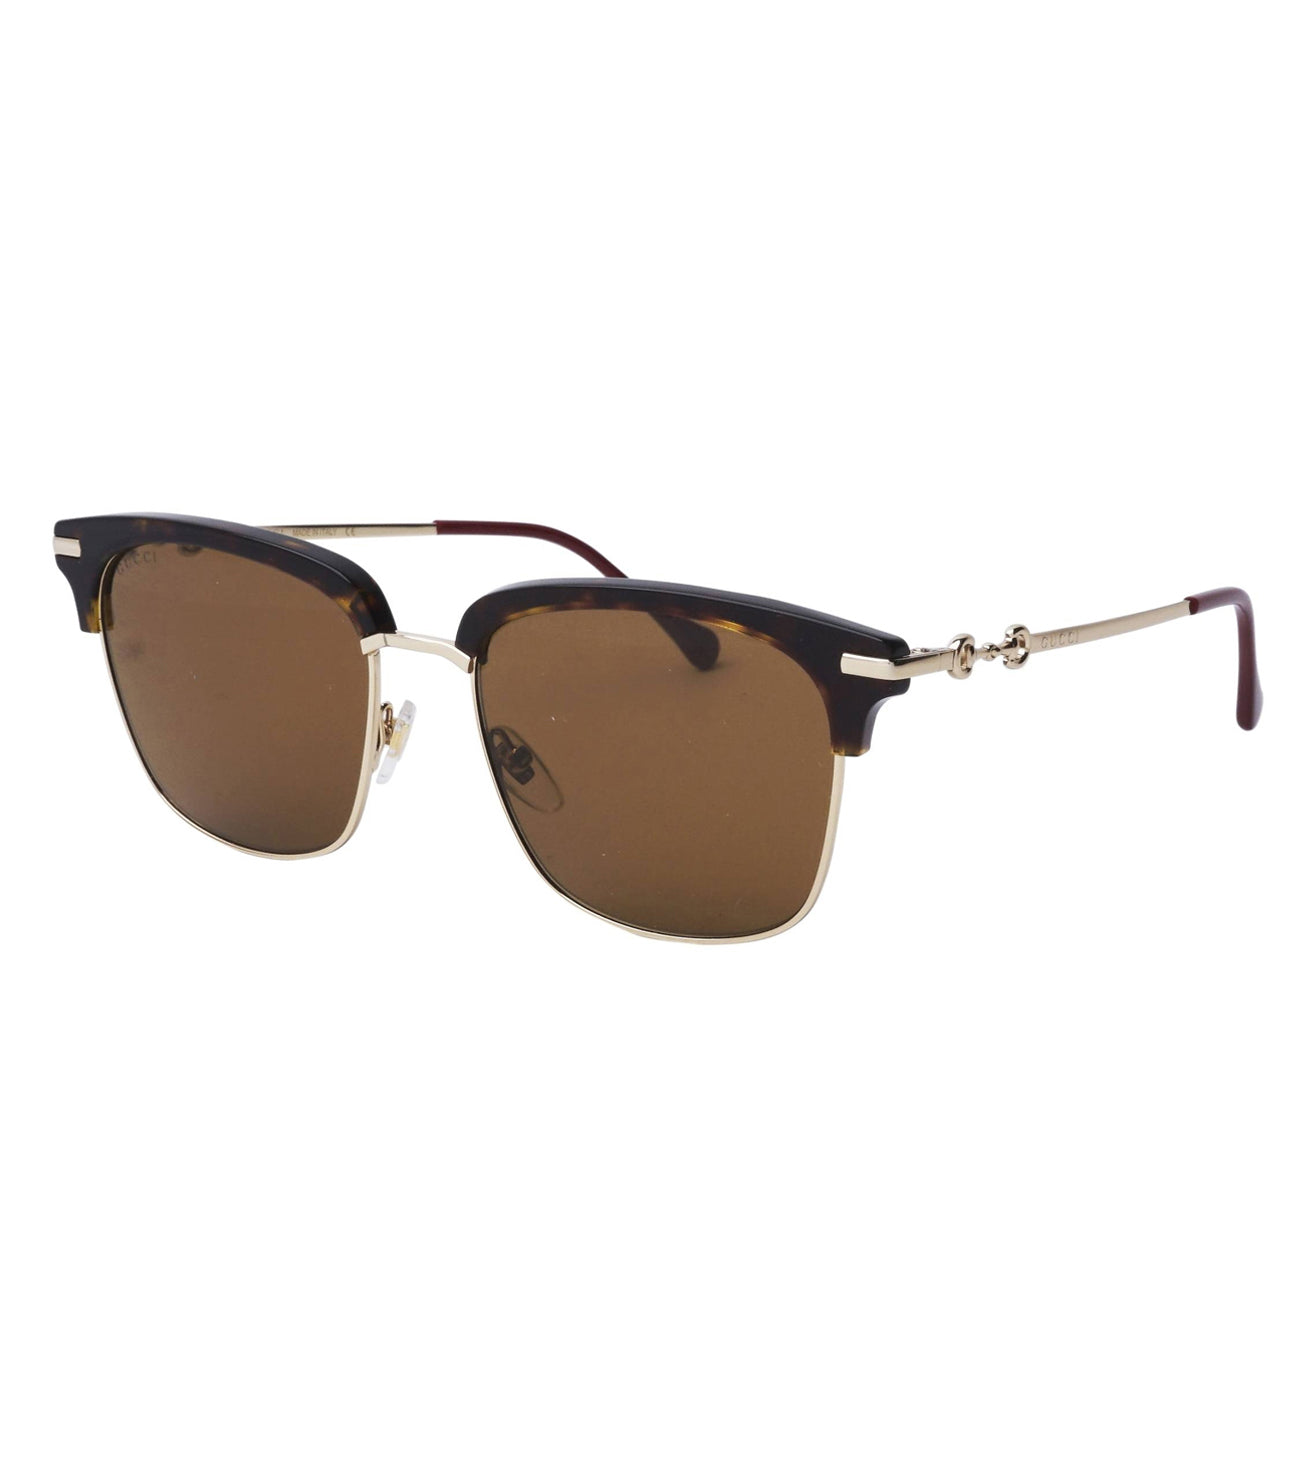 Gucci Men's Brown Rectangular Sunglasses